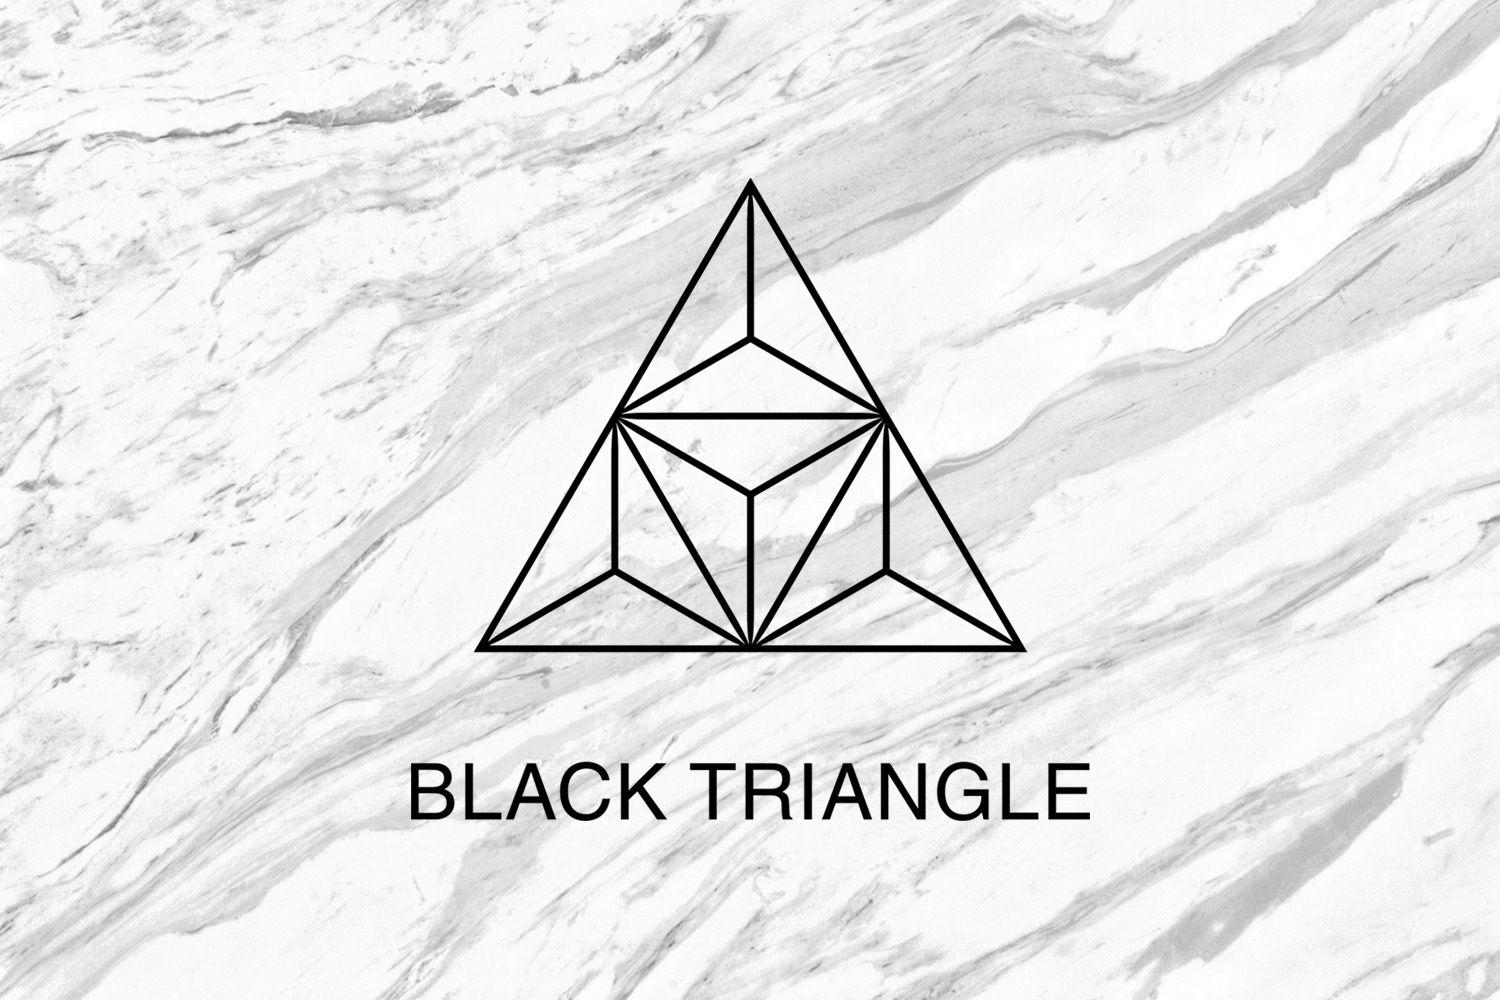 Black Triangle Pyramid Logo - Robert Bazaev - Black Triangle